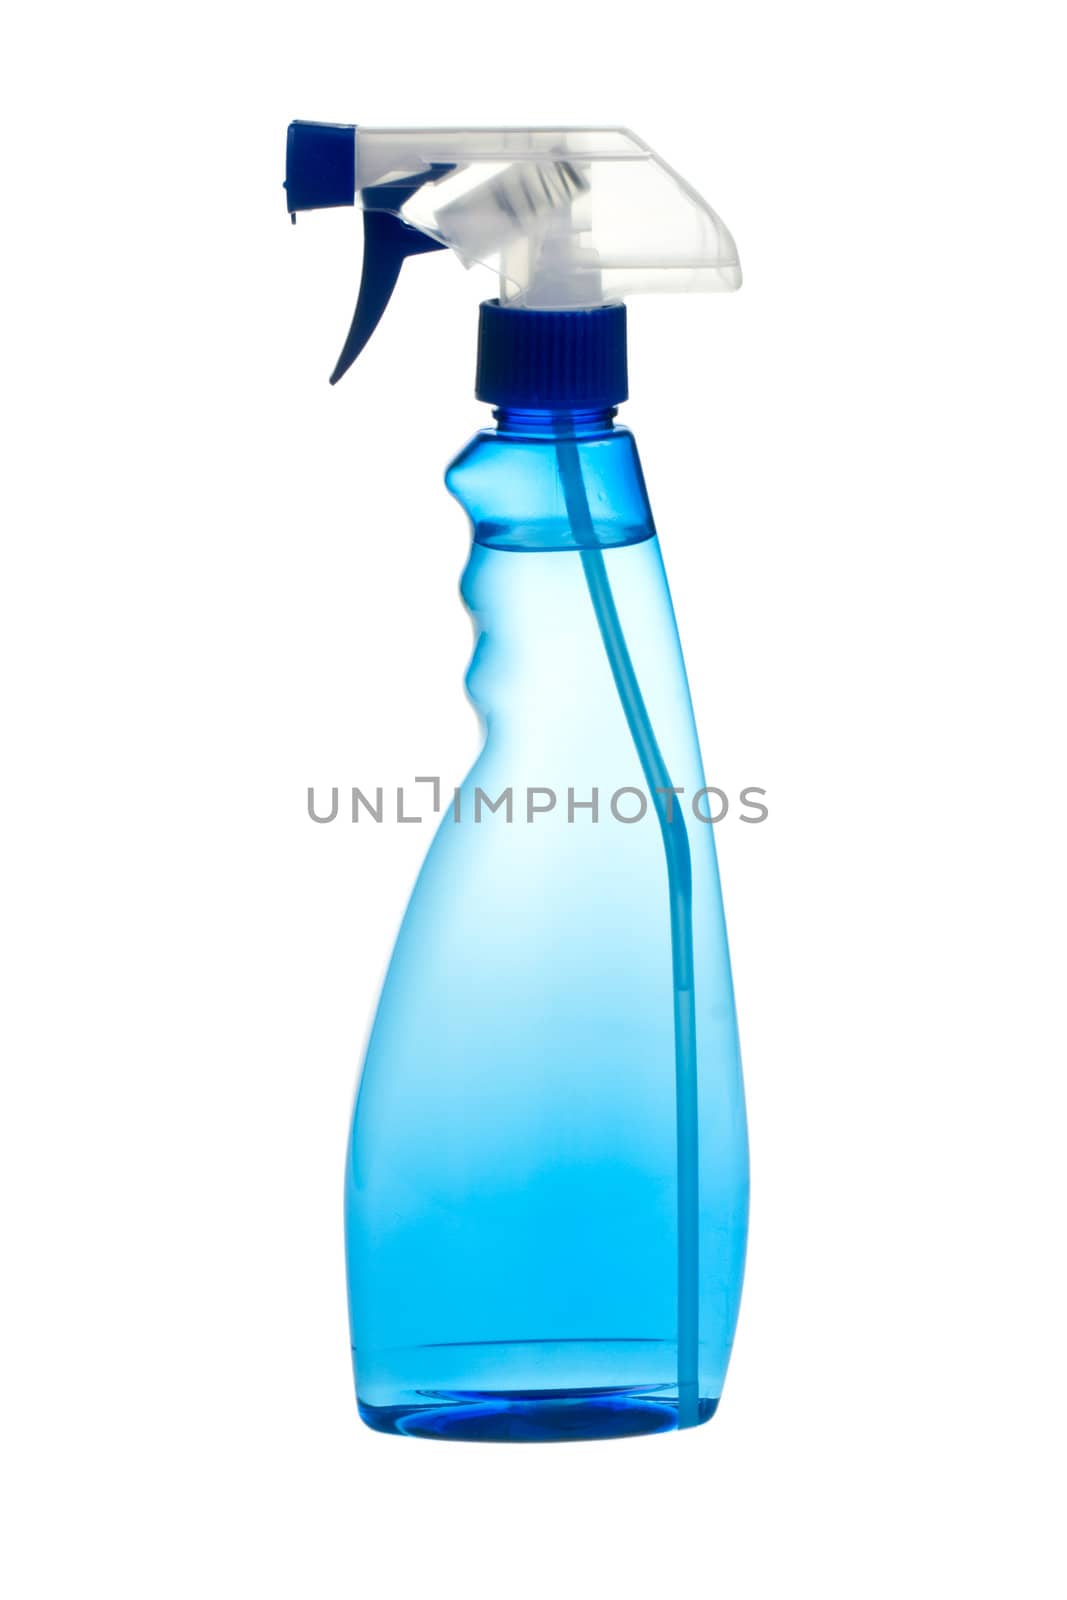 Blue sprayer by naumoid